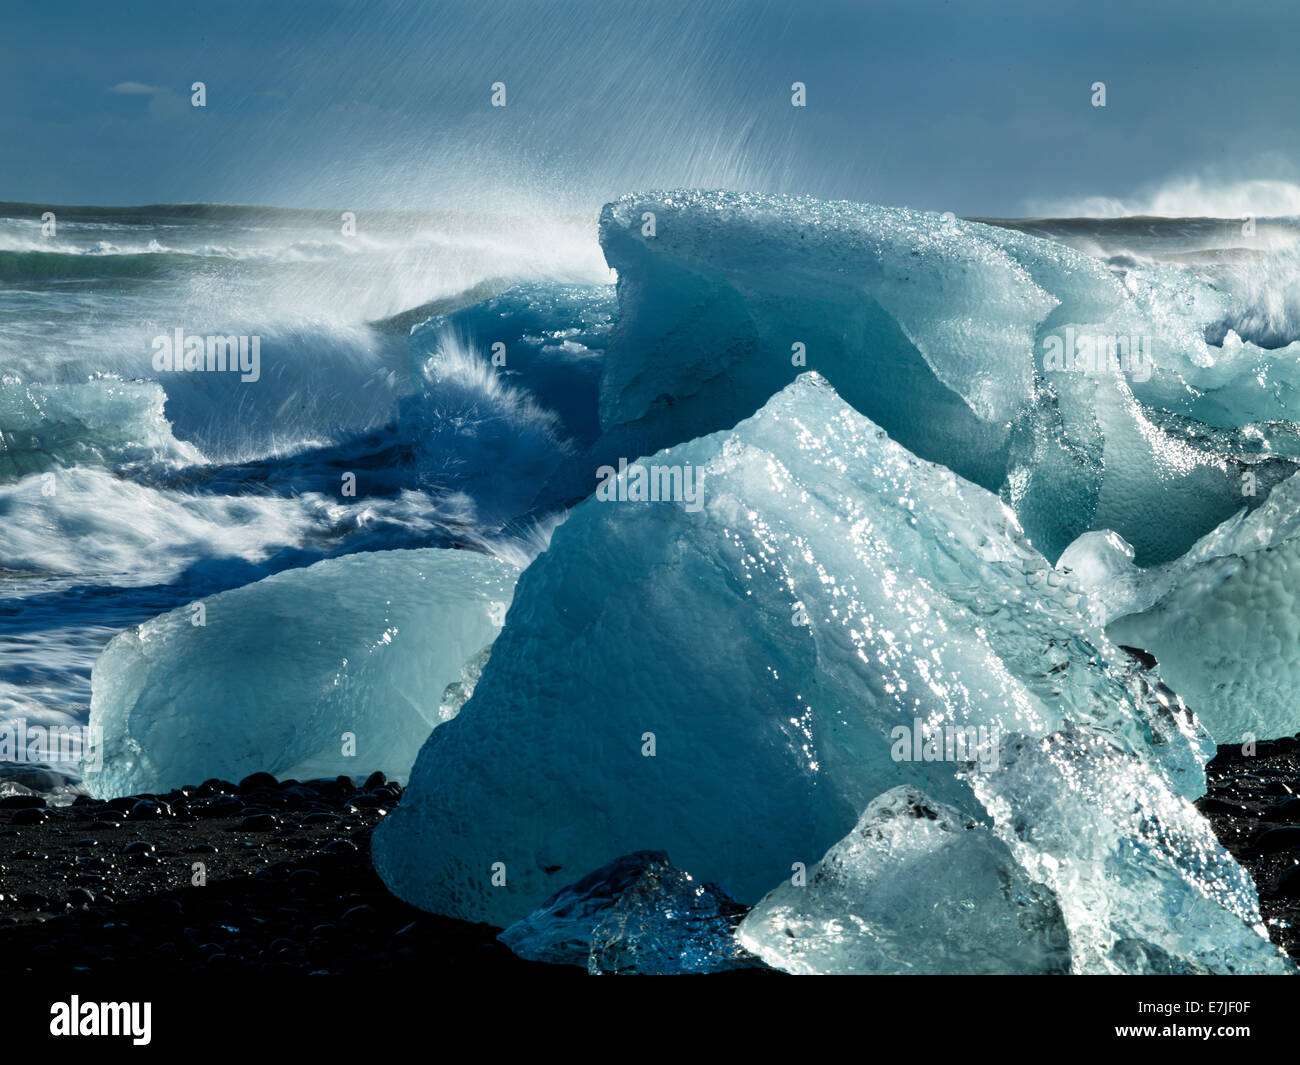 Ice, floe, river, flow, glacier, glacier lake, island, Iceland, Europe, Jöjulsarlon, coast, sea, Northern Europe, water, winter Stock Photo